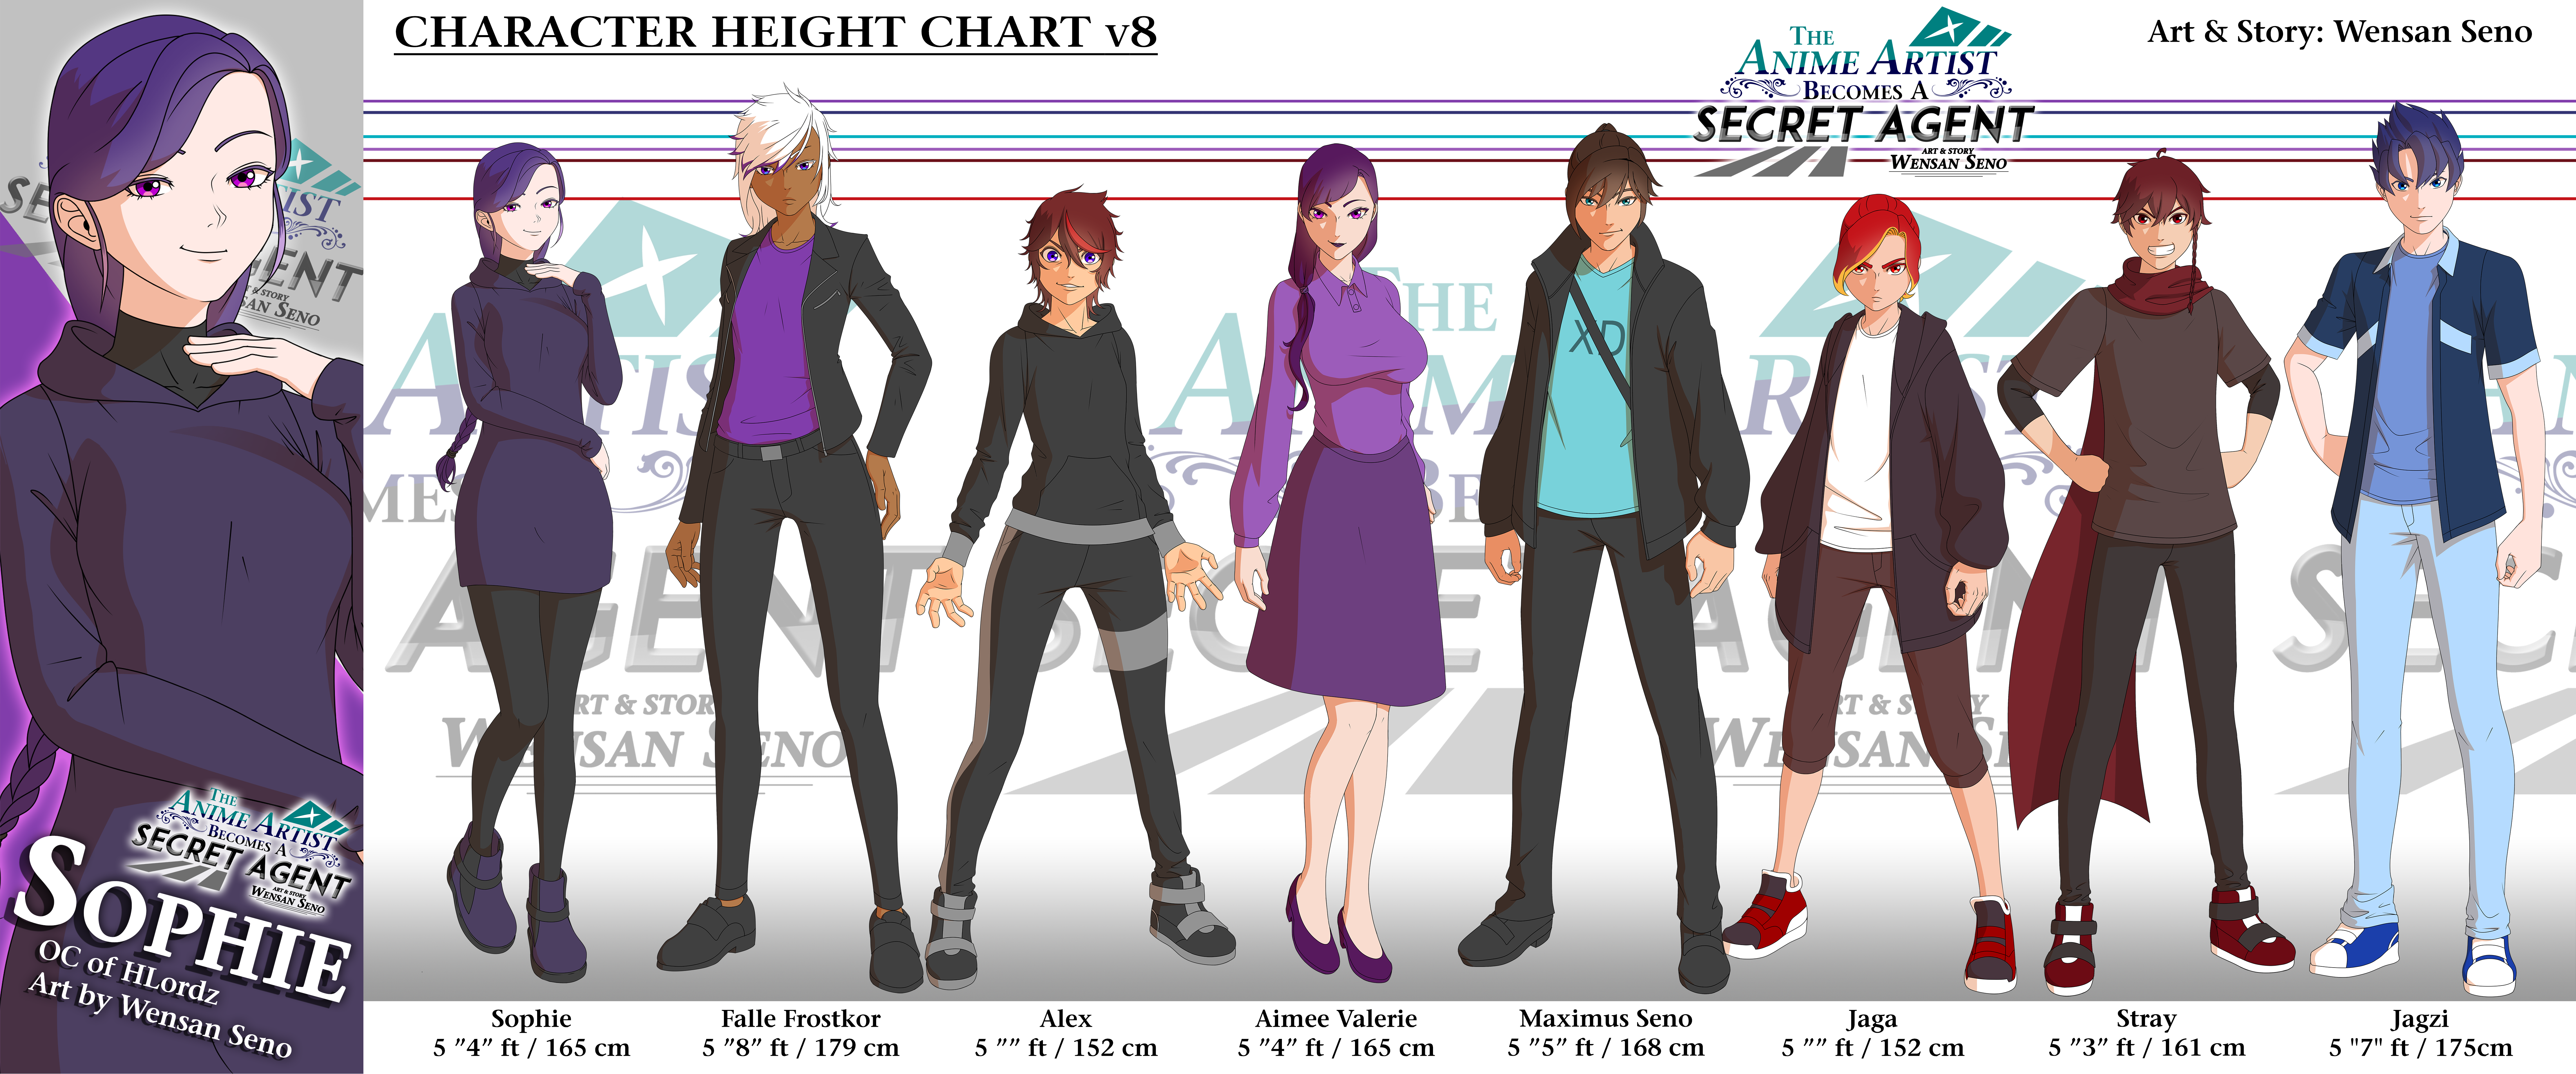 Character Height Chart v8 (Anime Secret Agent) by wensan4 on DeviantArt